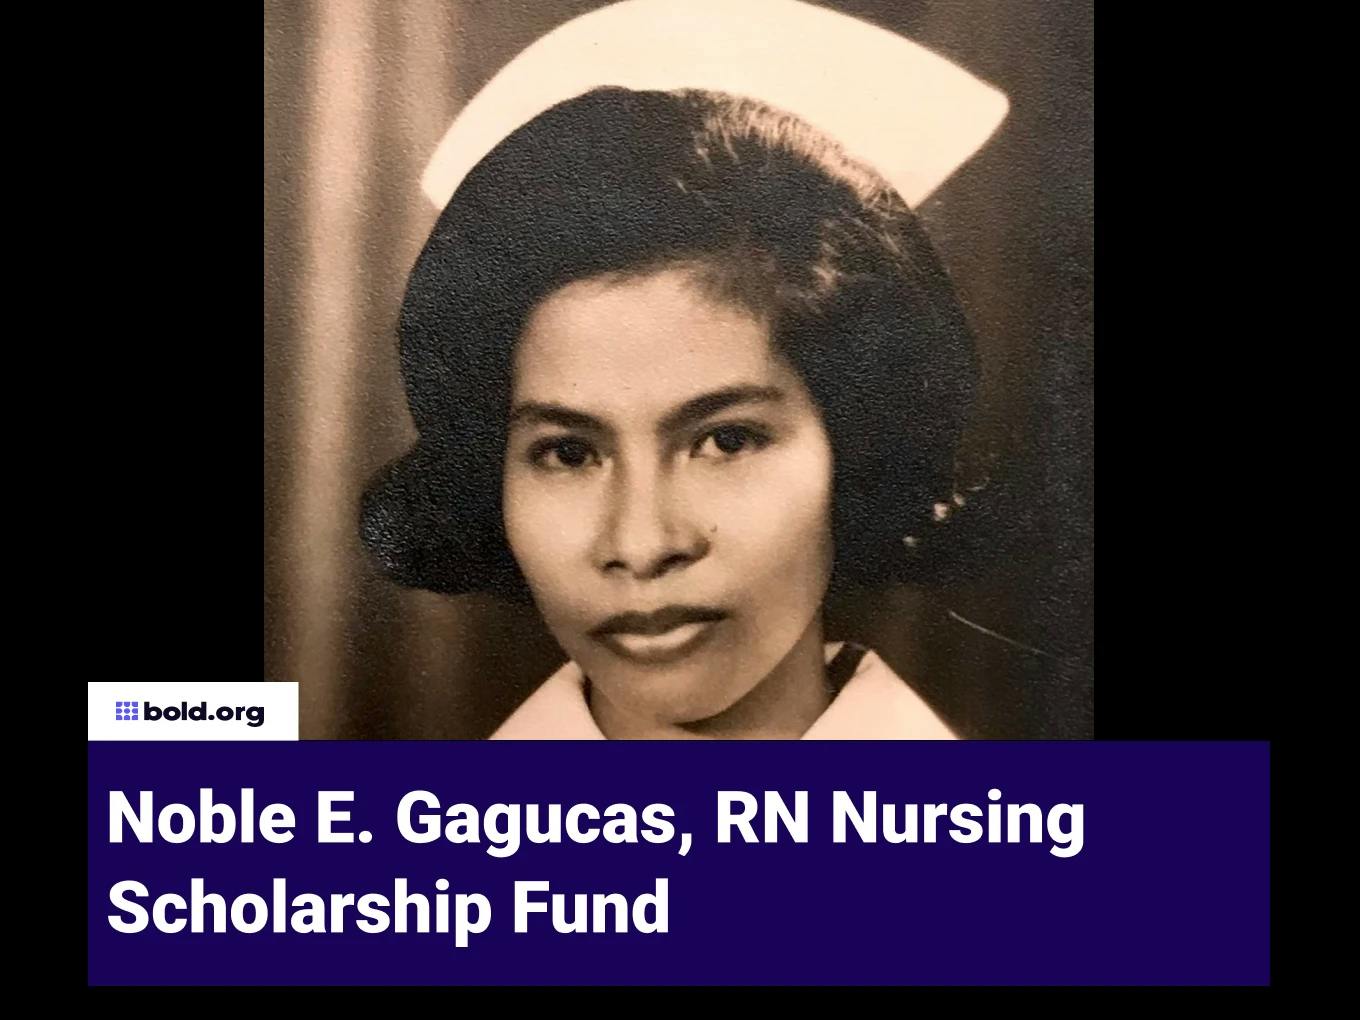 Noble E. Gagucas, RN Nursing Scholarship Fund